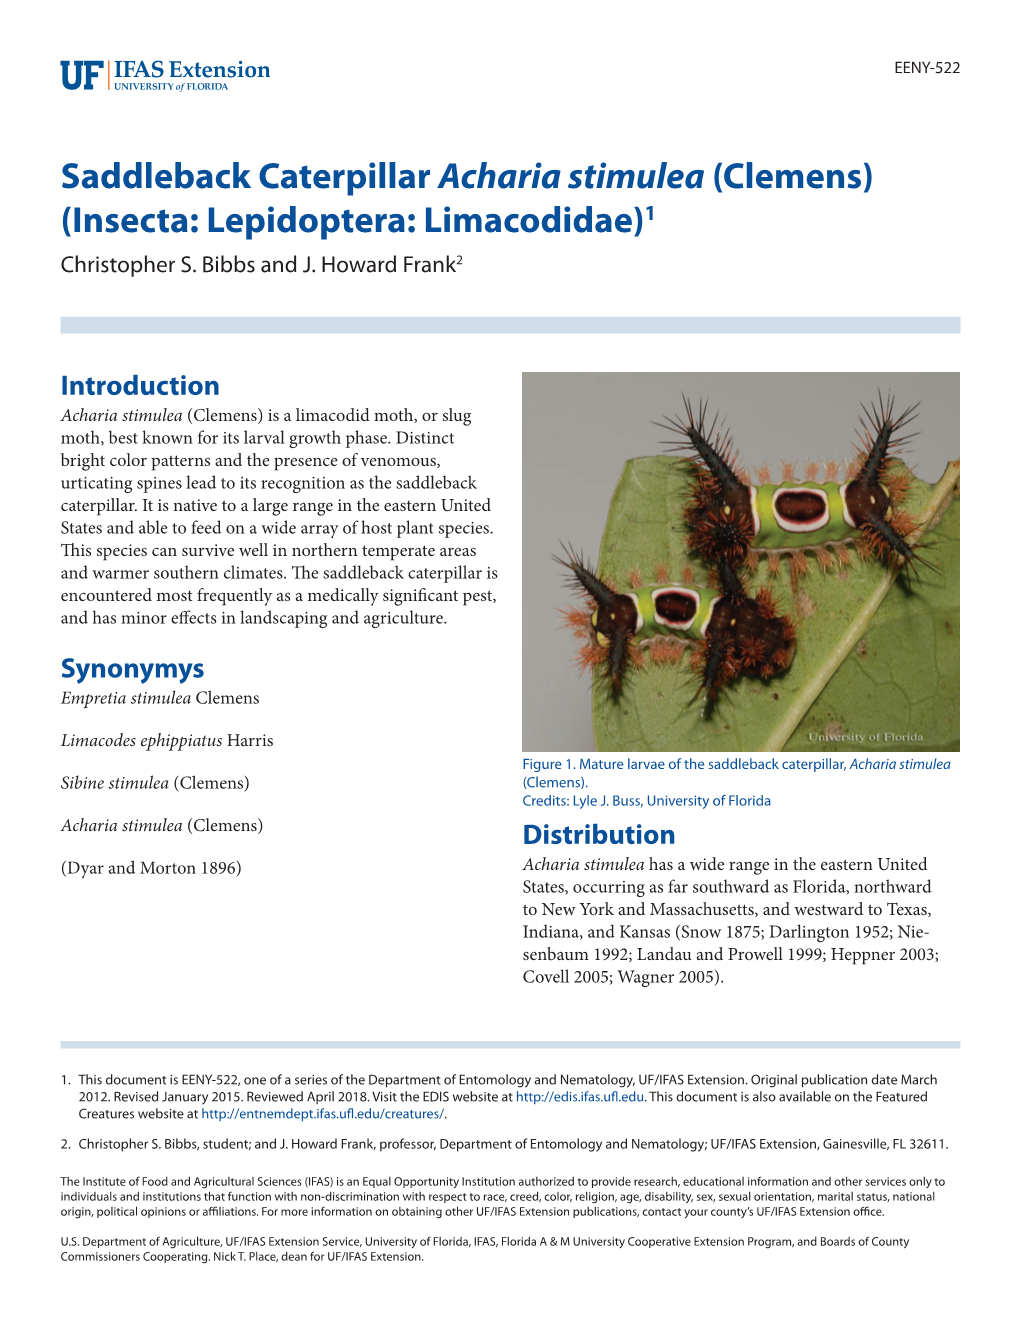 Saddleback Caterpillar Acharia Stimulea (Clemens) (Insecta: Lepidoptera: Limacodidae)1 Christopher S